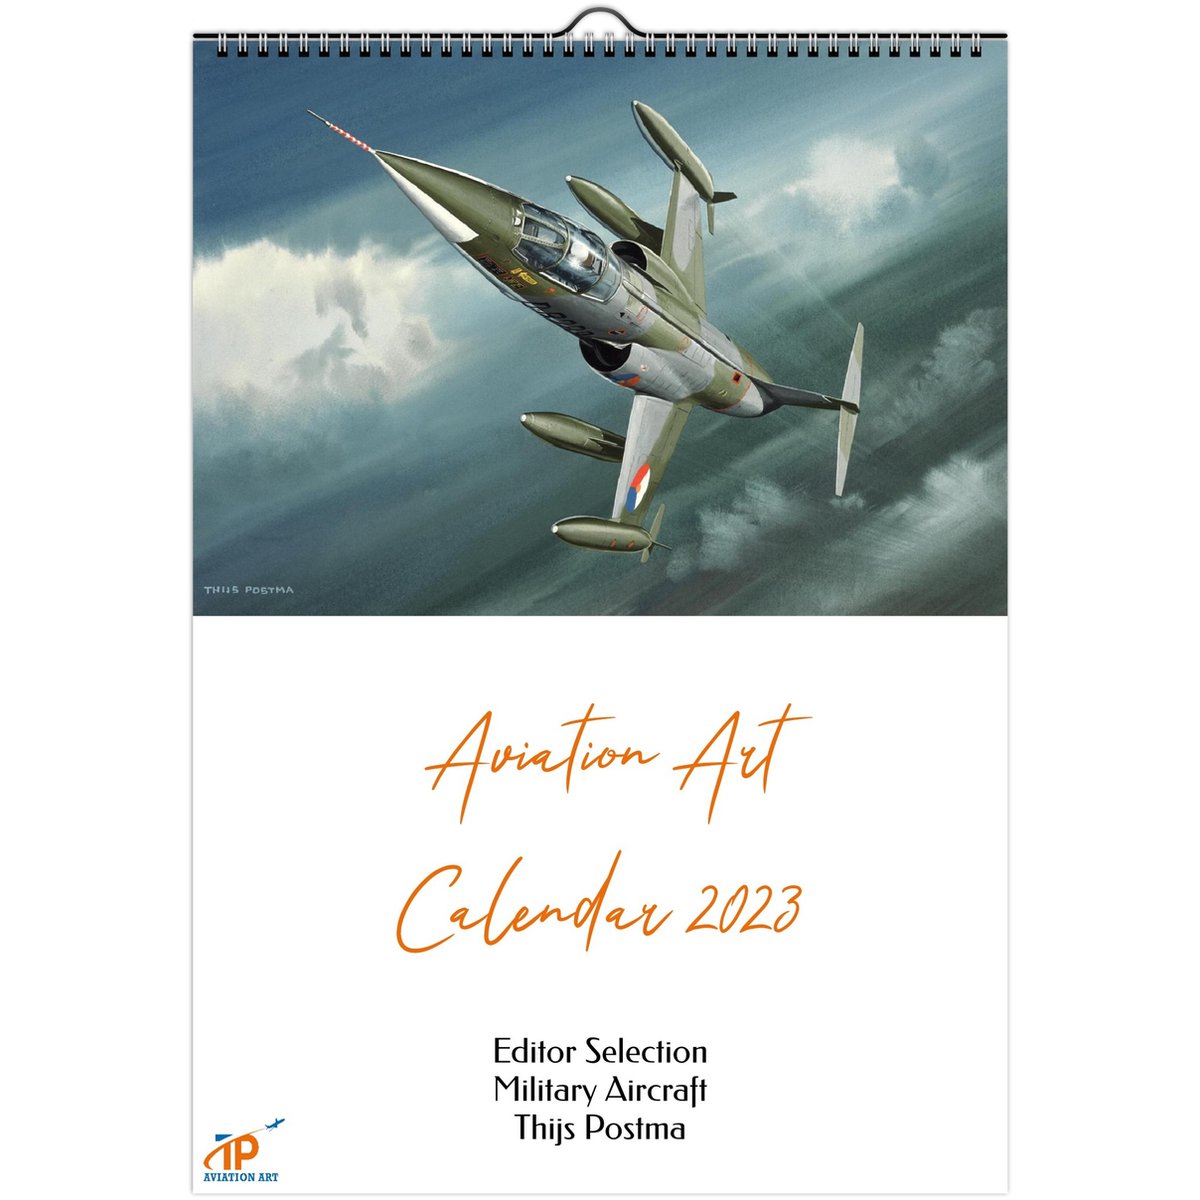 Thijs Postma - Luchtvaart kunst / Aviation Art Kalender 2023 - Editor Selectie